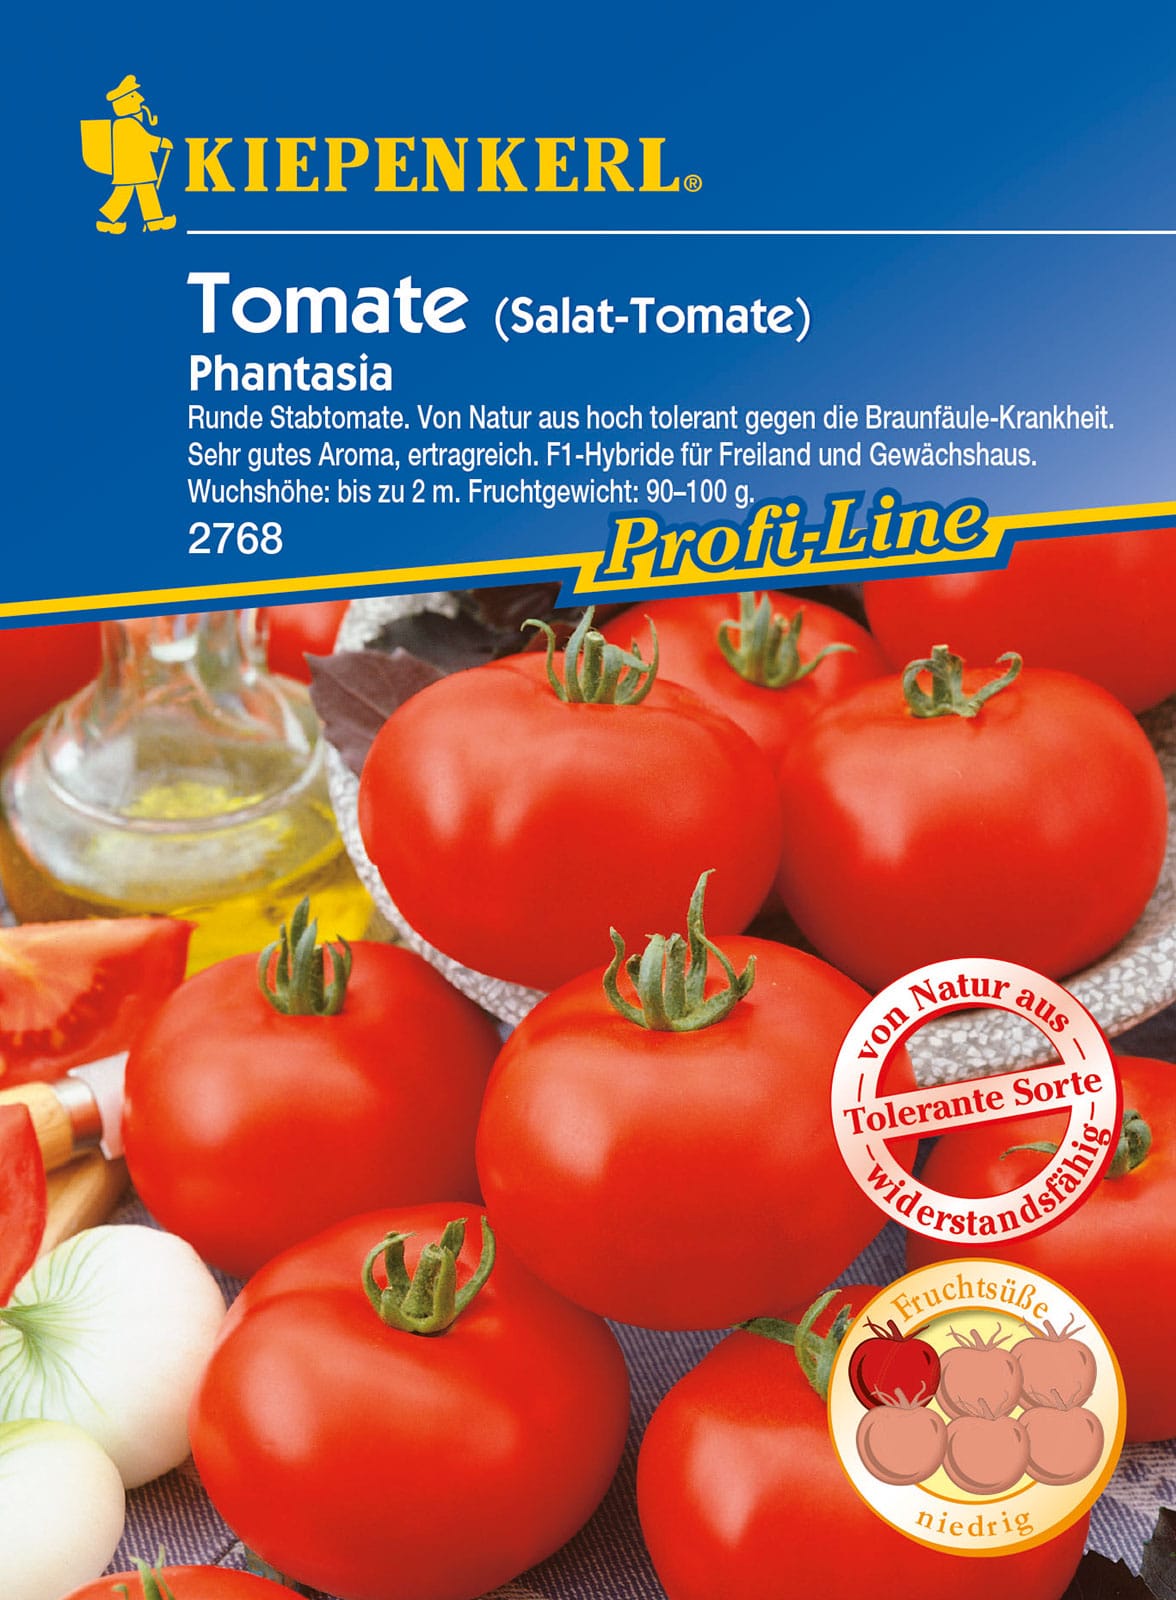 Kiepenkerl Tomate "Phantasia"